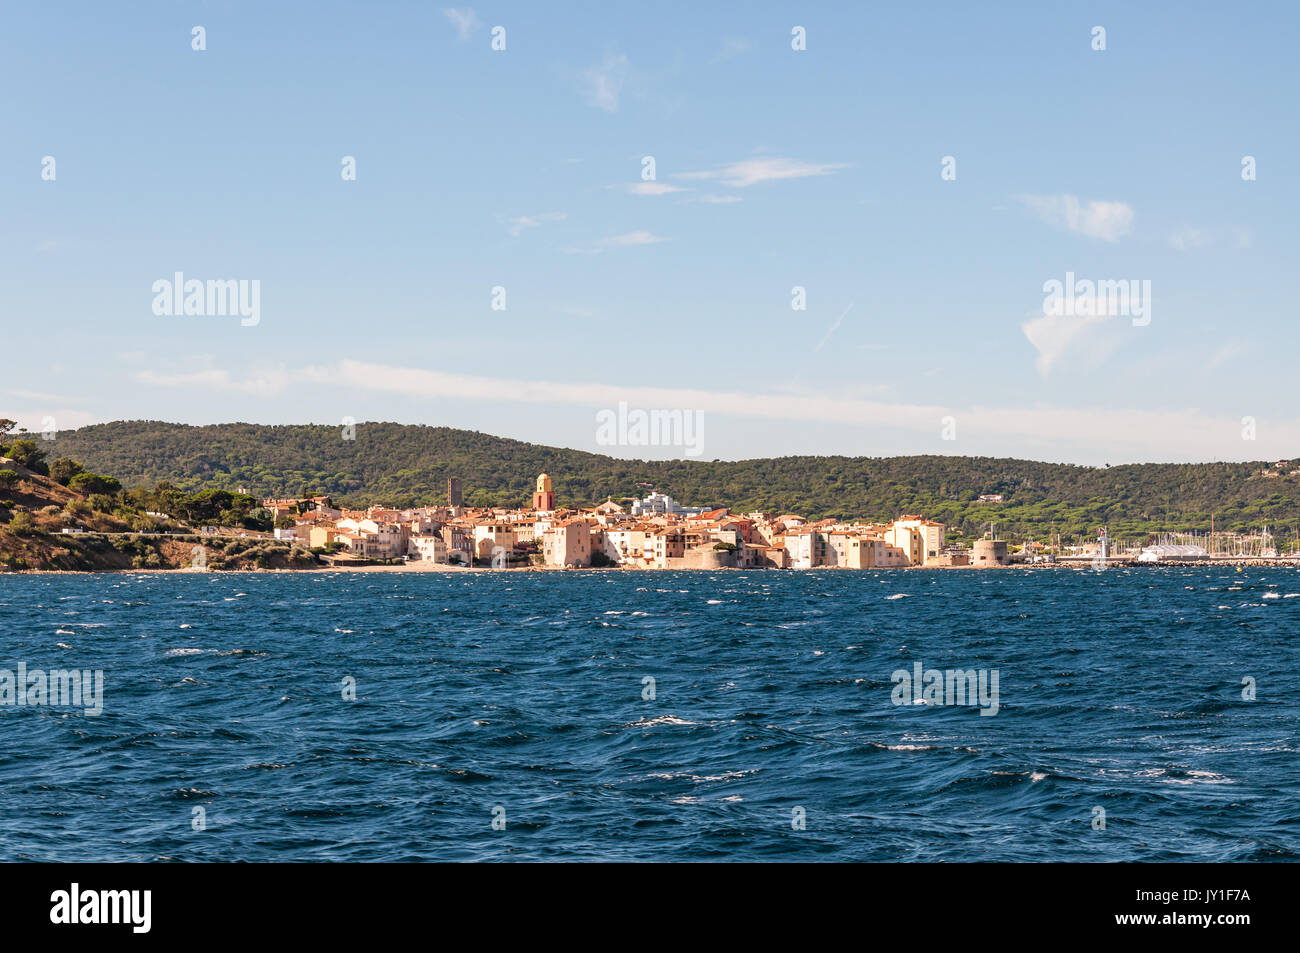 View of Saint-Tropez town and Mediterranean sea, France Stock Photo